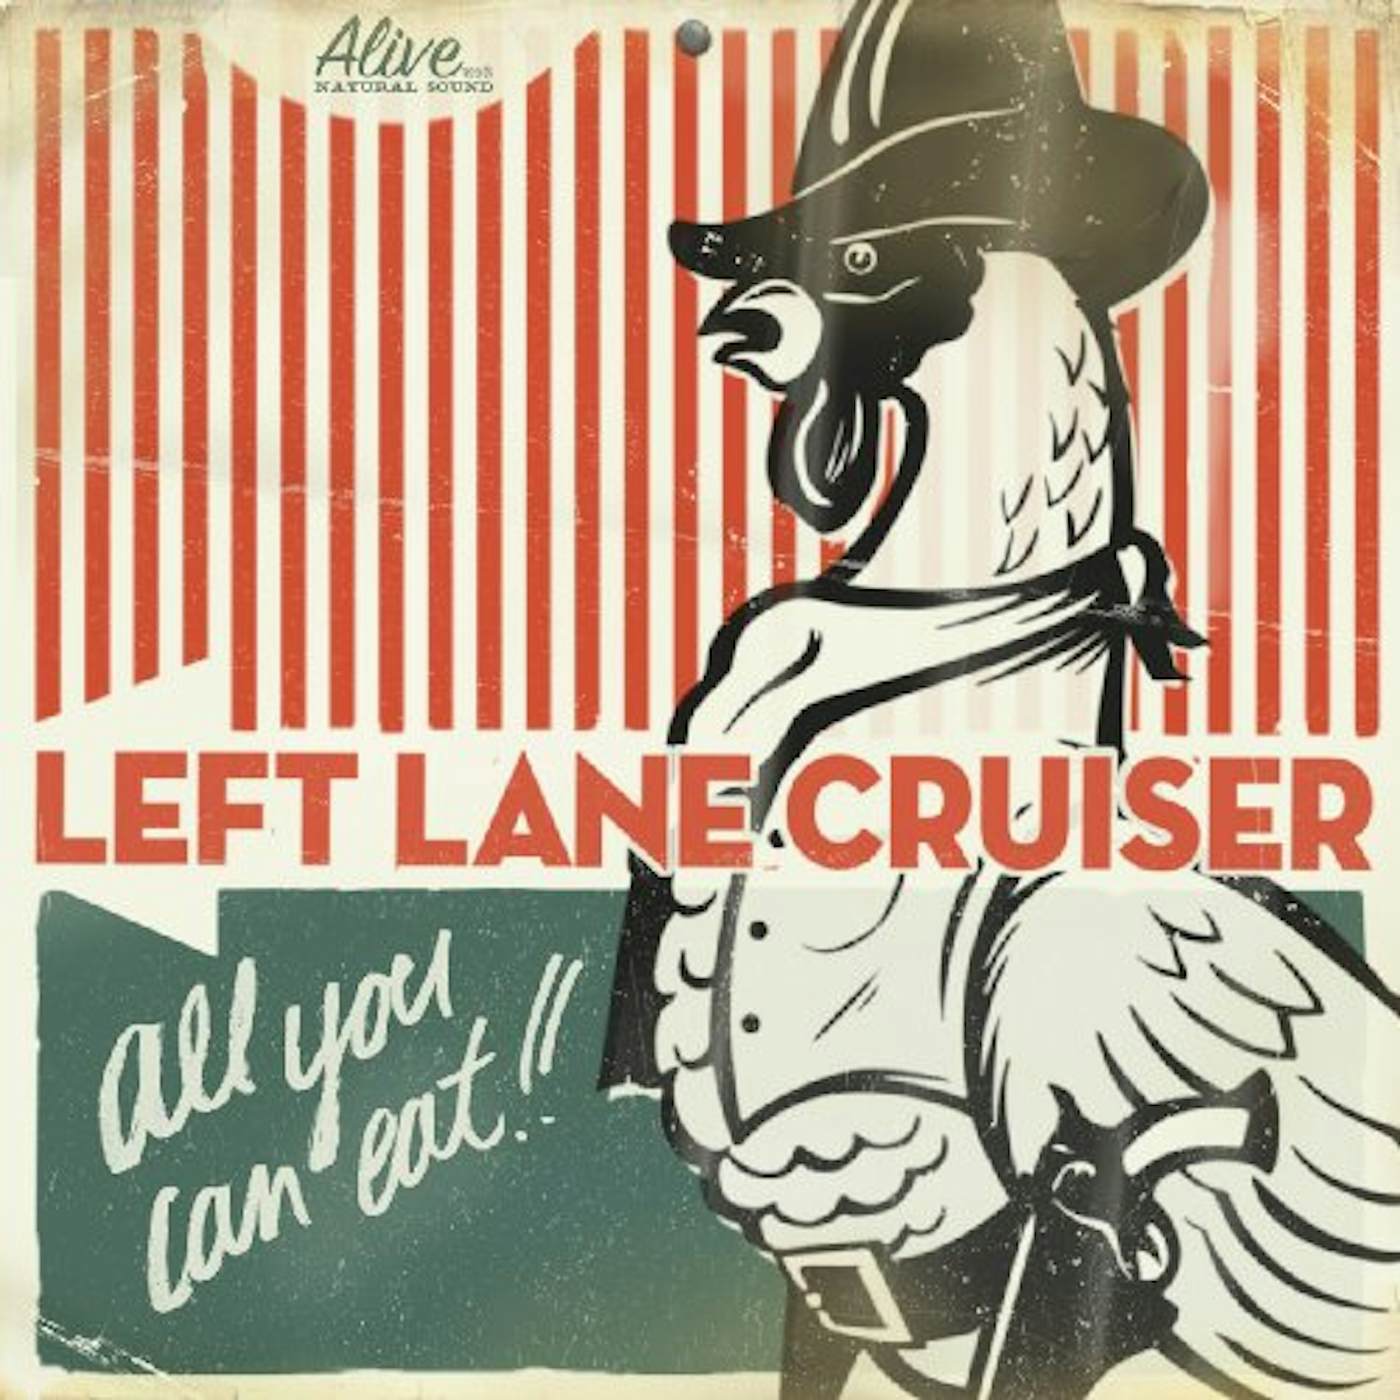 Left Lane Cruiser ALL YOU CAN EAT Vinyl Record